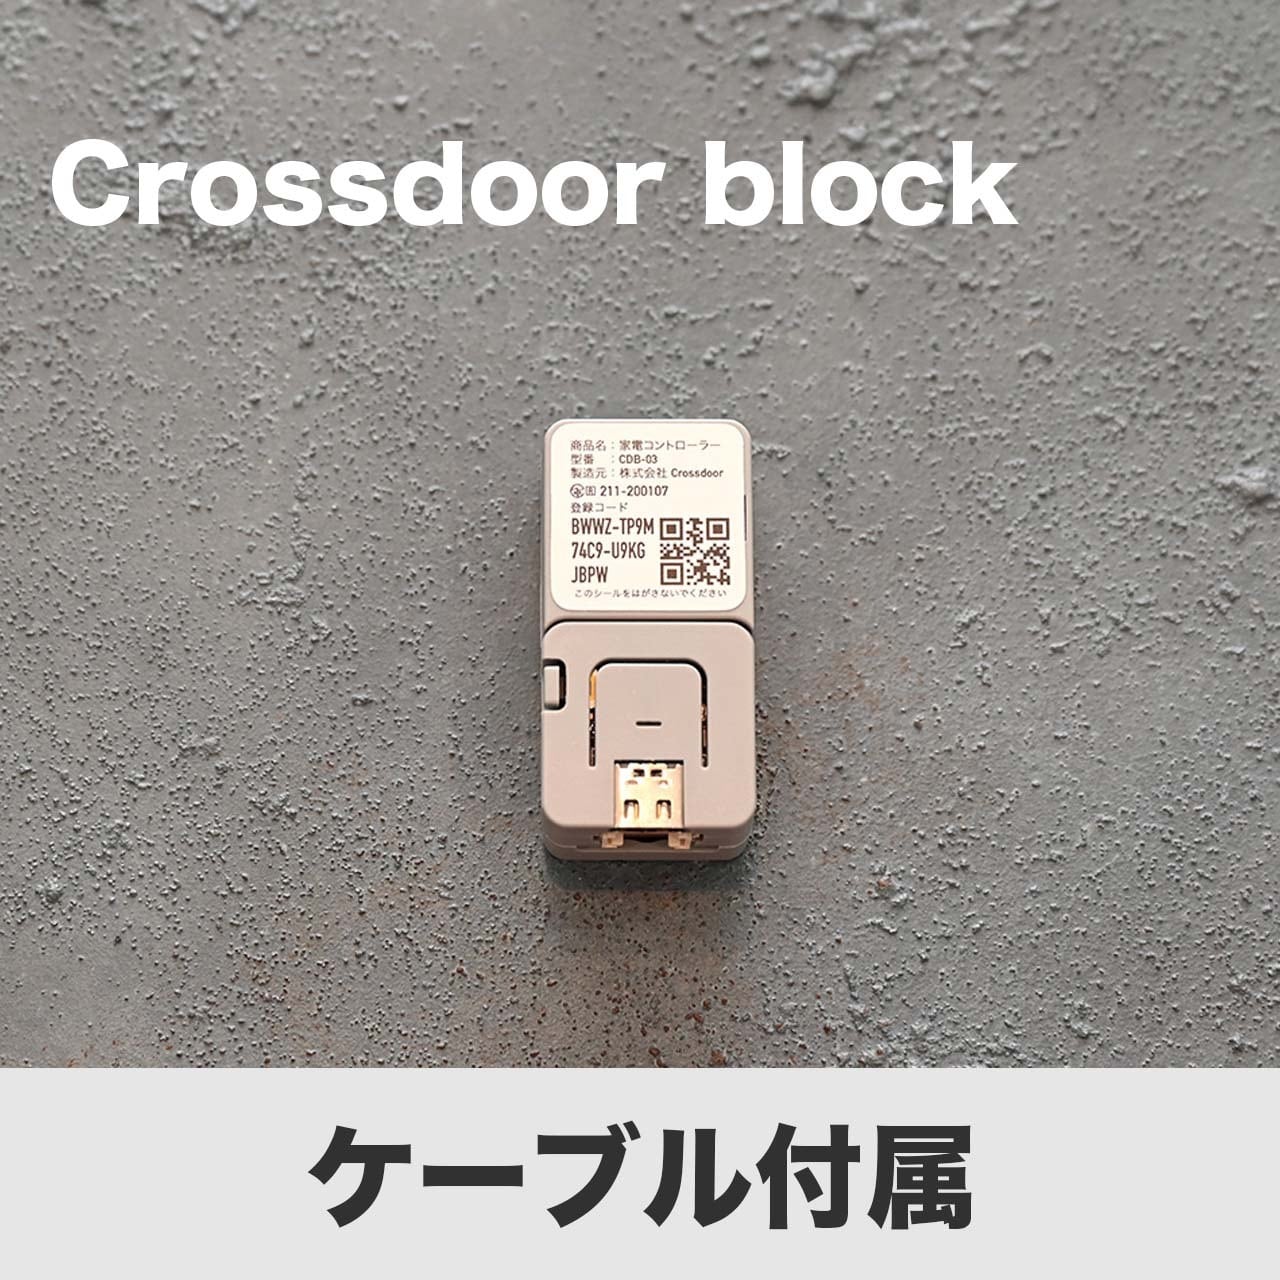 Crossdoor block（型番: CDB-03）